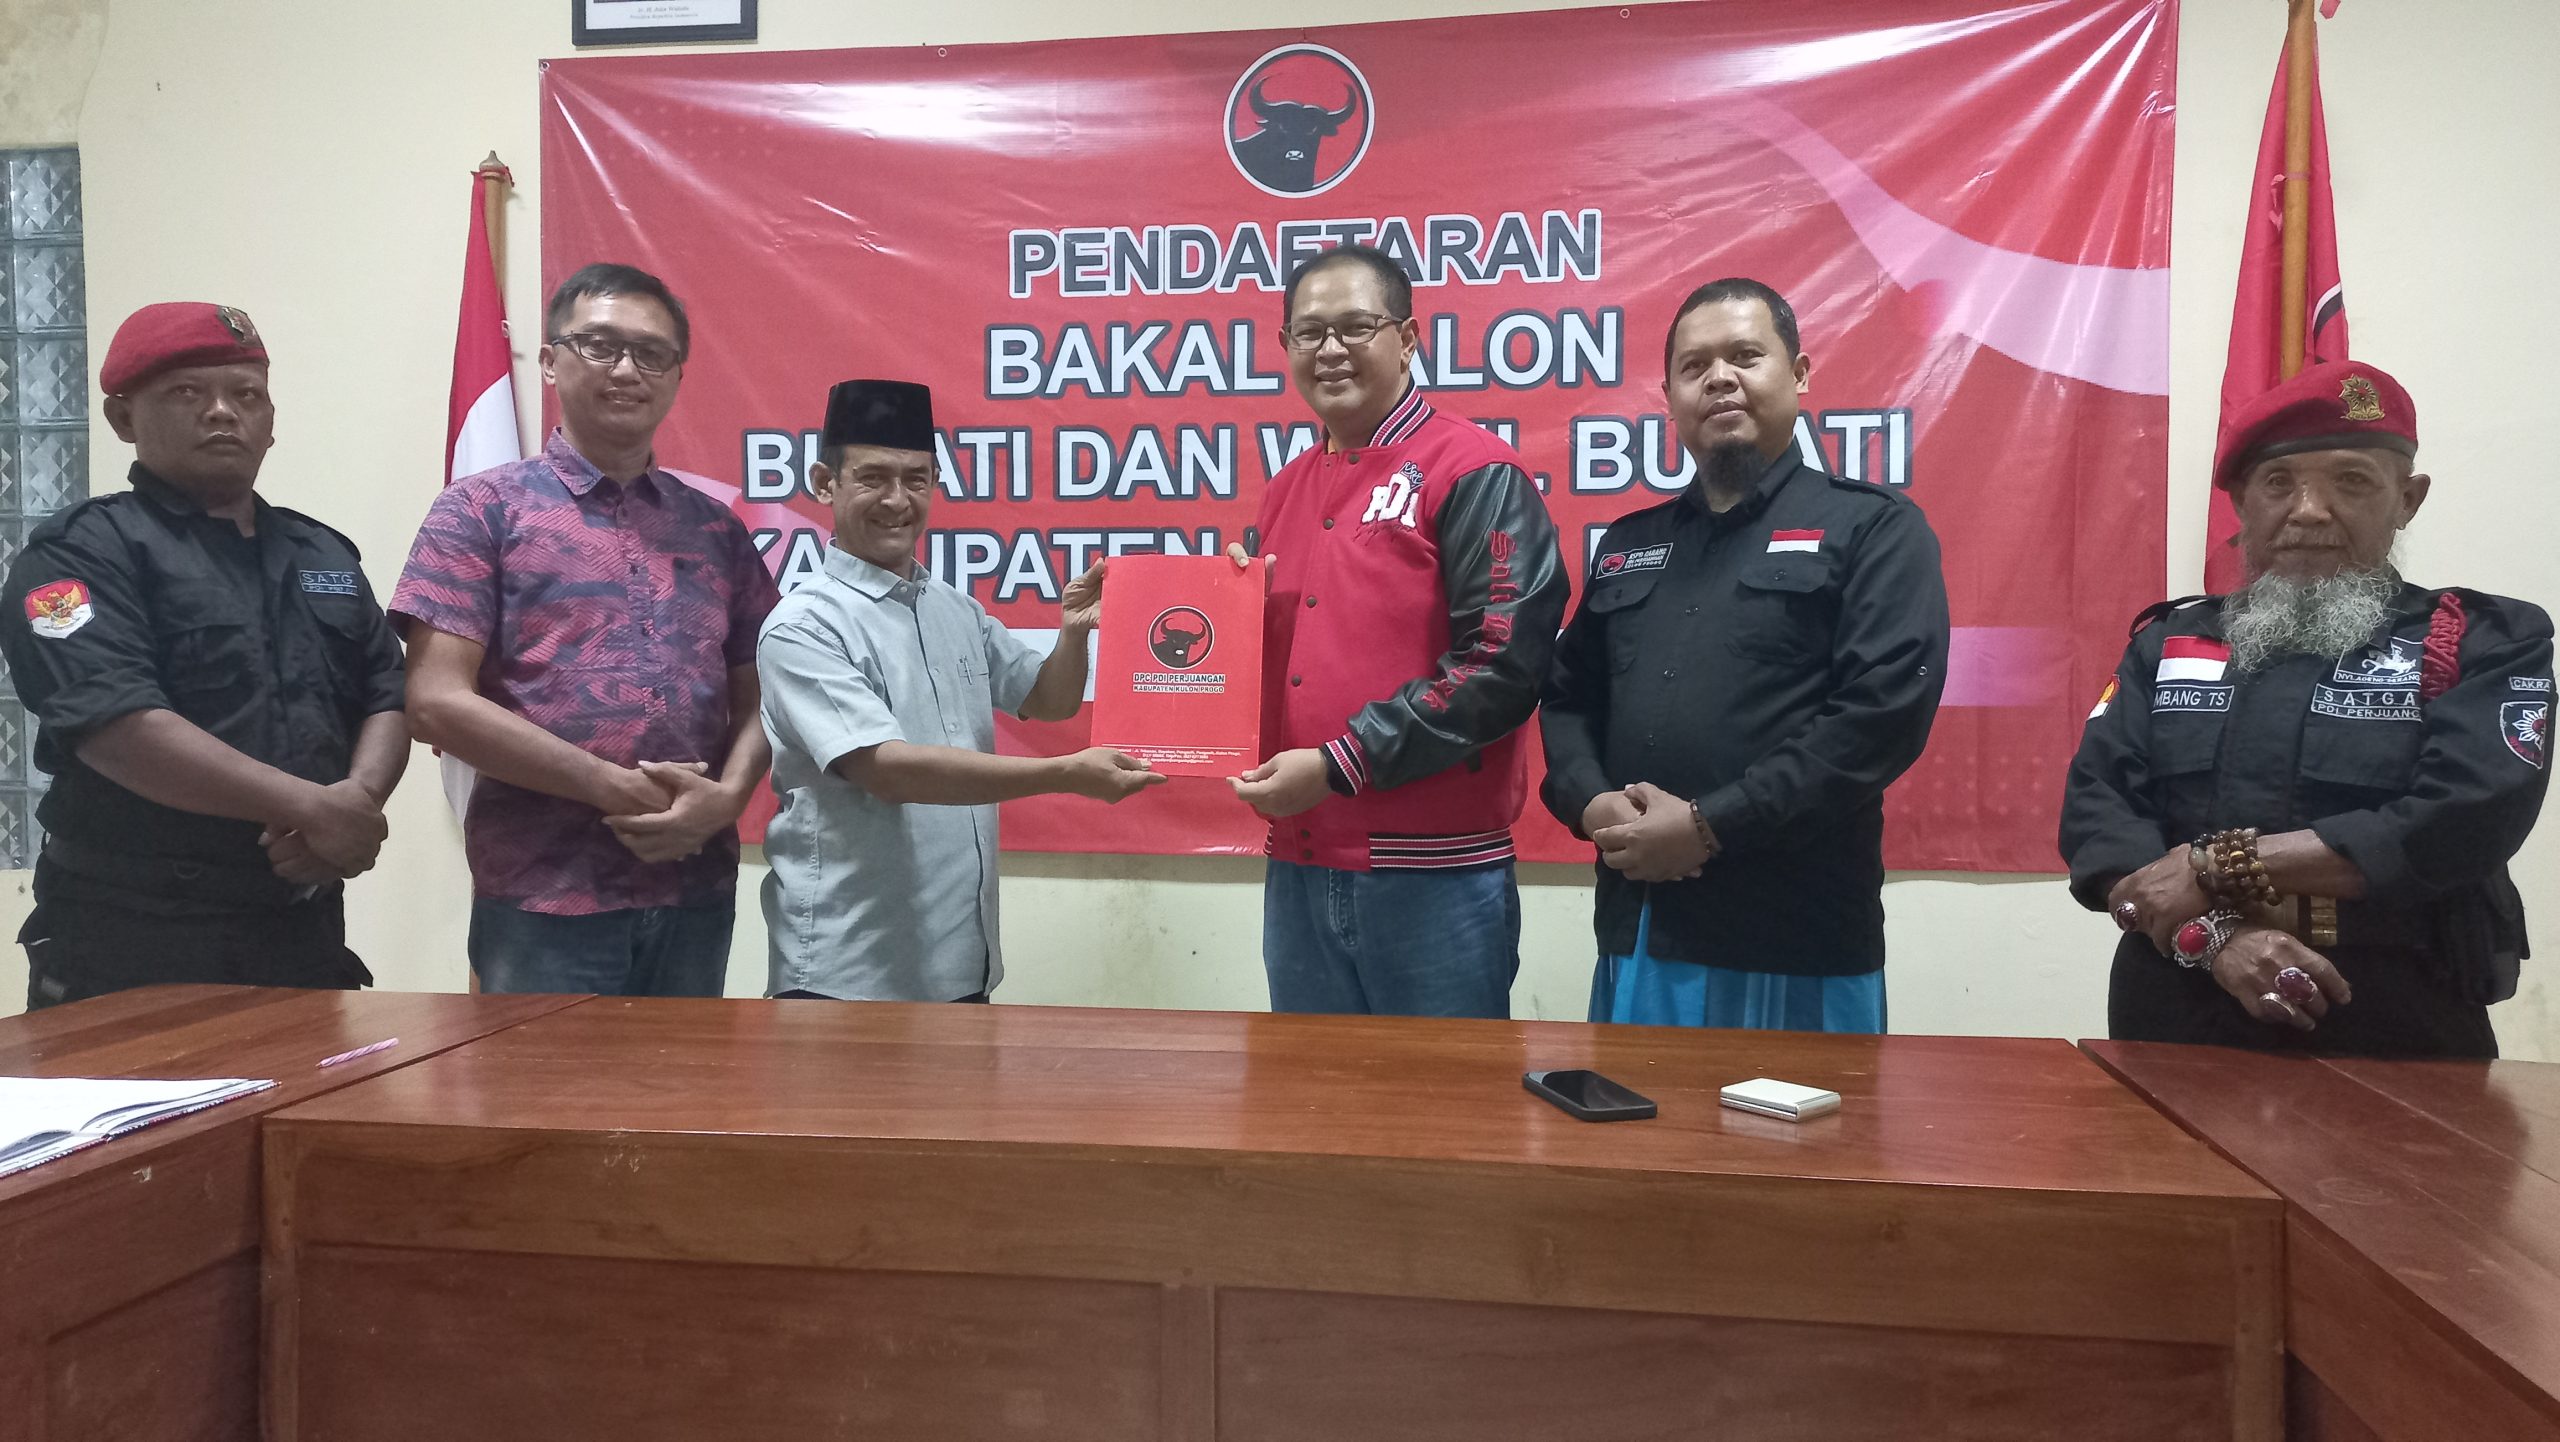 Riyadi Sunarto, Kepala Dispertaru Kulon Progo Daftar Penjaringan Bacawabup di PDI Perjuangan Kulon Progo